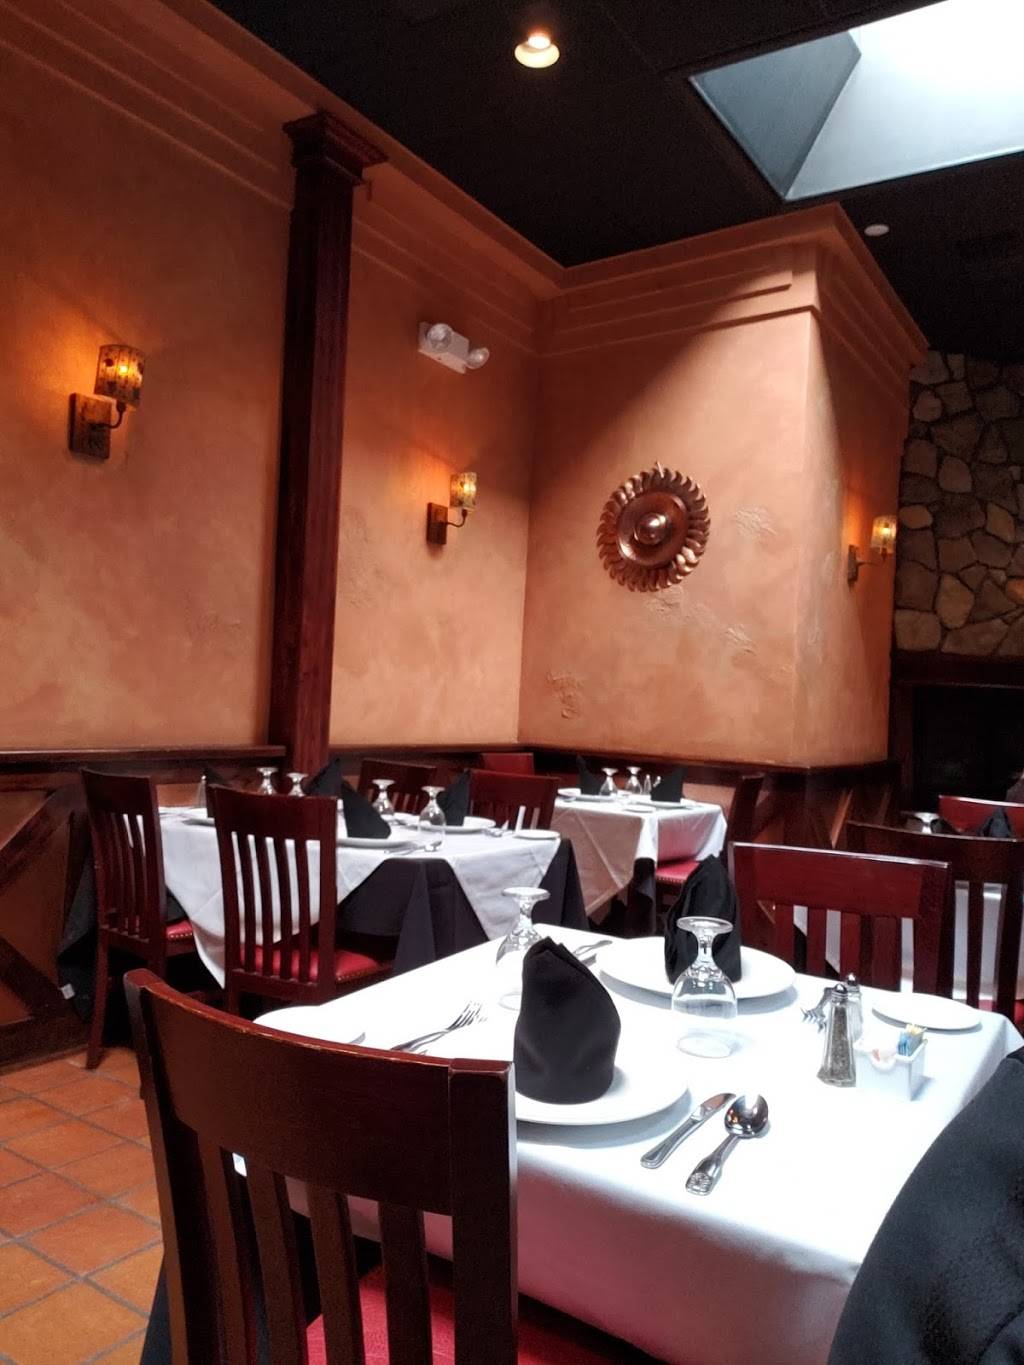 Pintxo y Tapas | restaurant | 47 N Dean St, Englewood, NJ 07631, USA | 2015699999 OR +1 201-569-9999